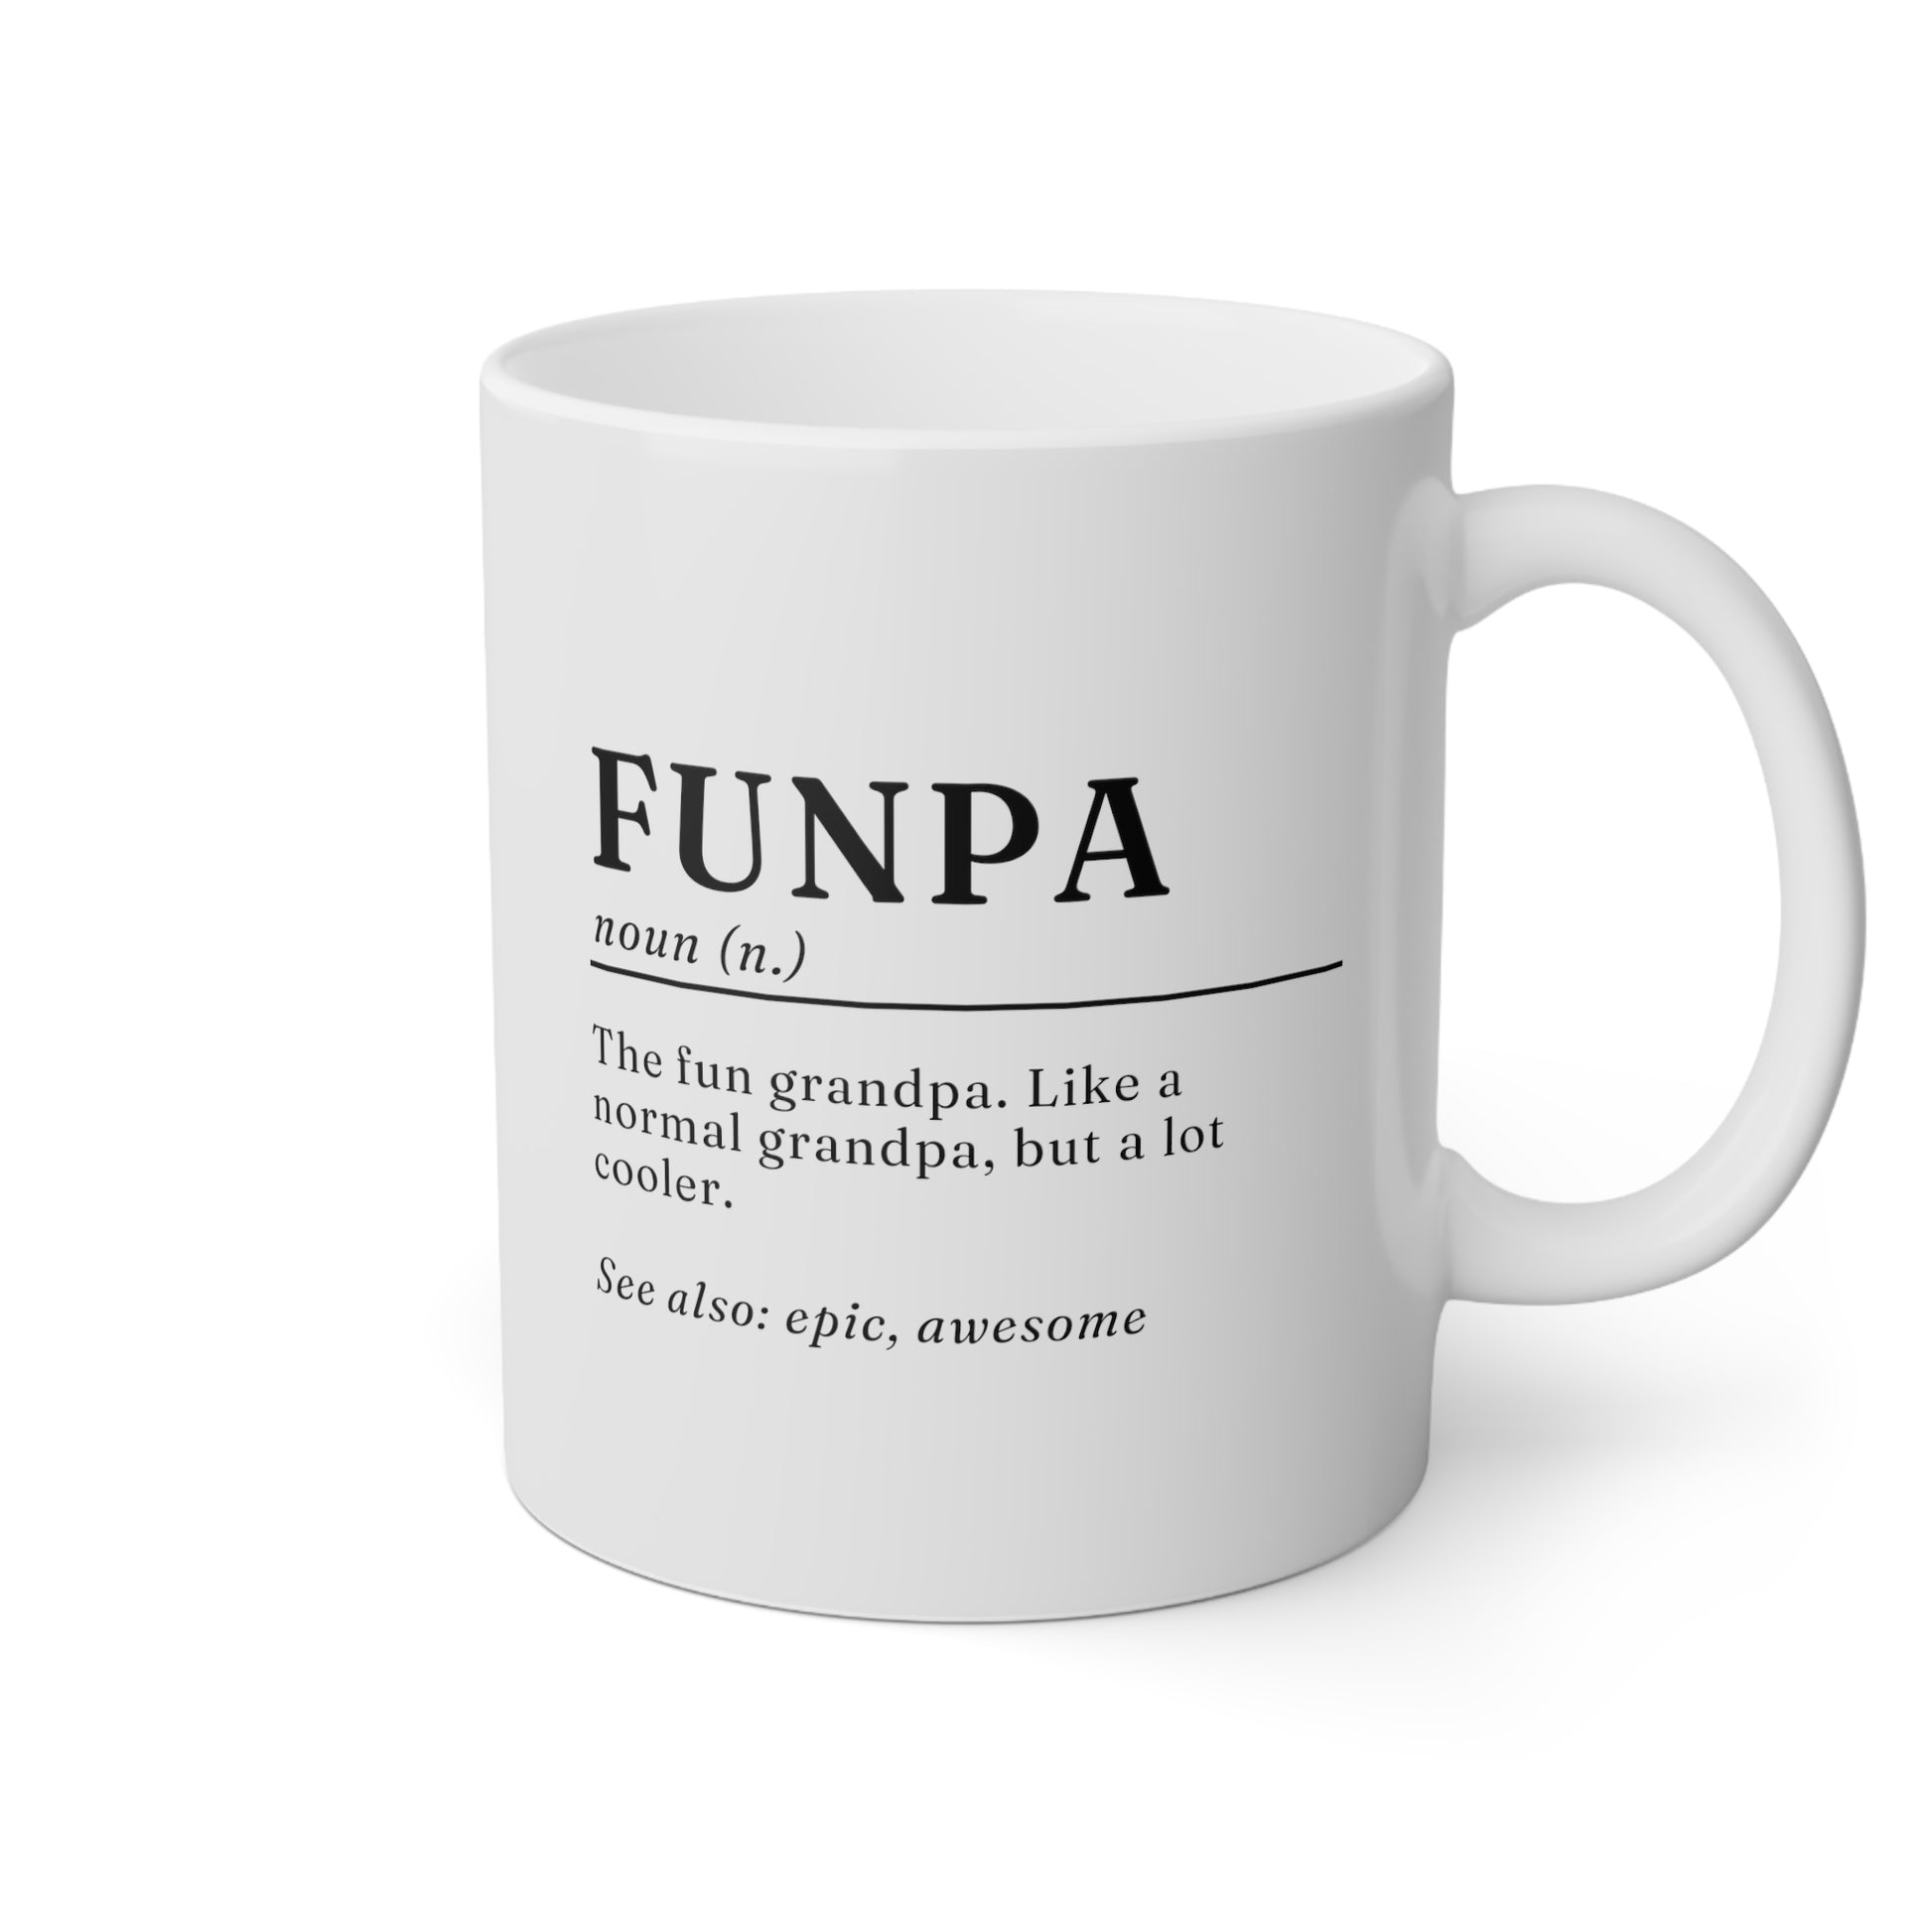 Funpa definition 11oz white funny large coffee mug gift for grandpa grandfather grandad pops custom pop personalized waveywares wavey wares wavywares wavy wares